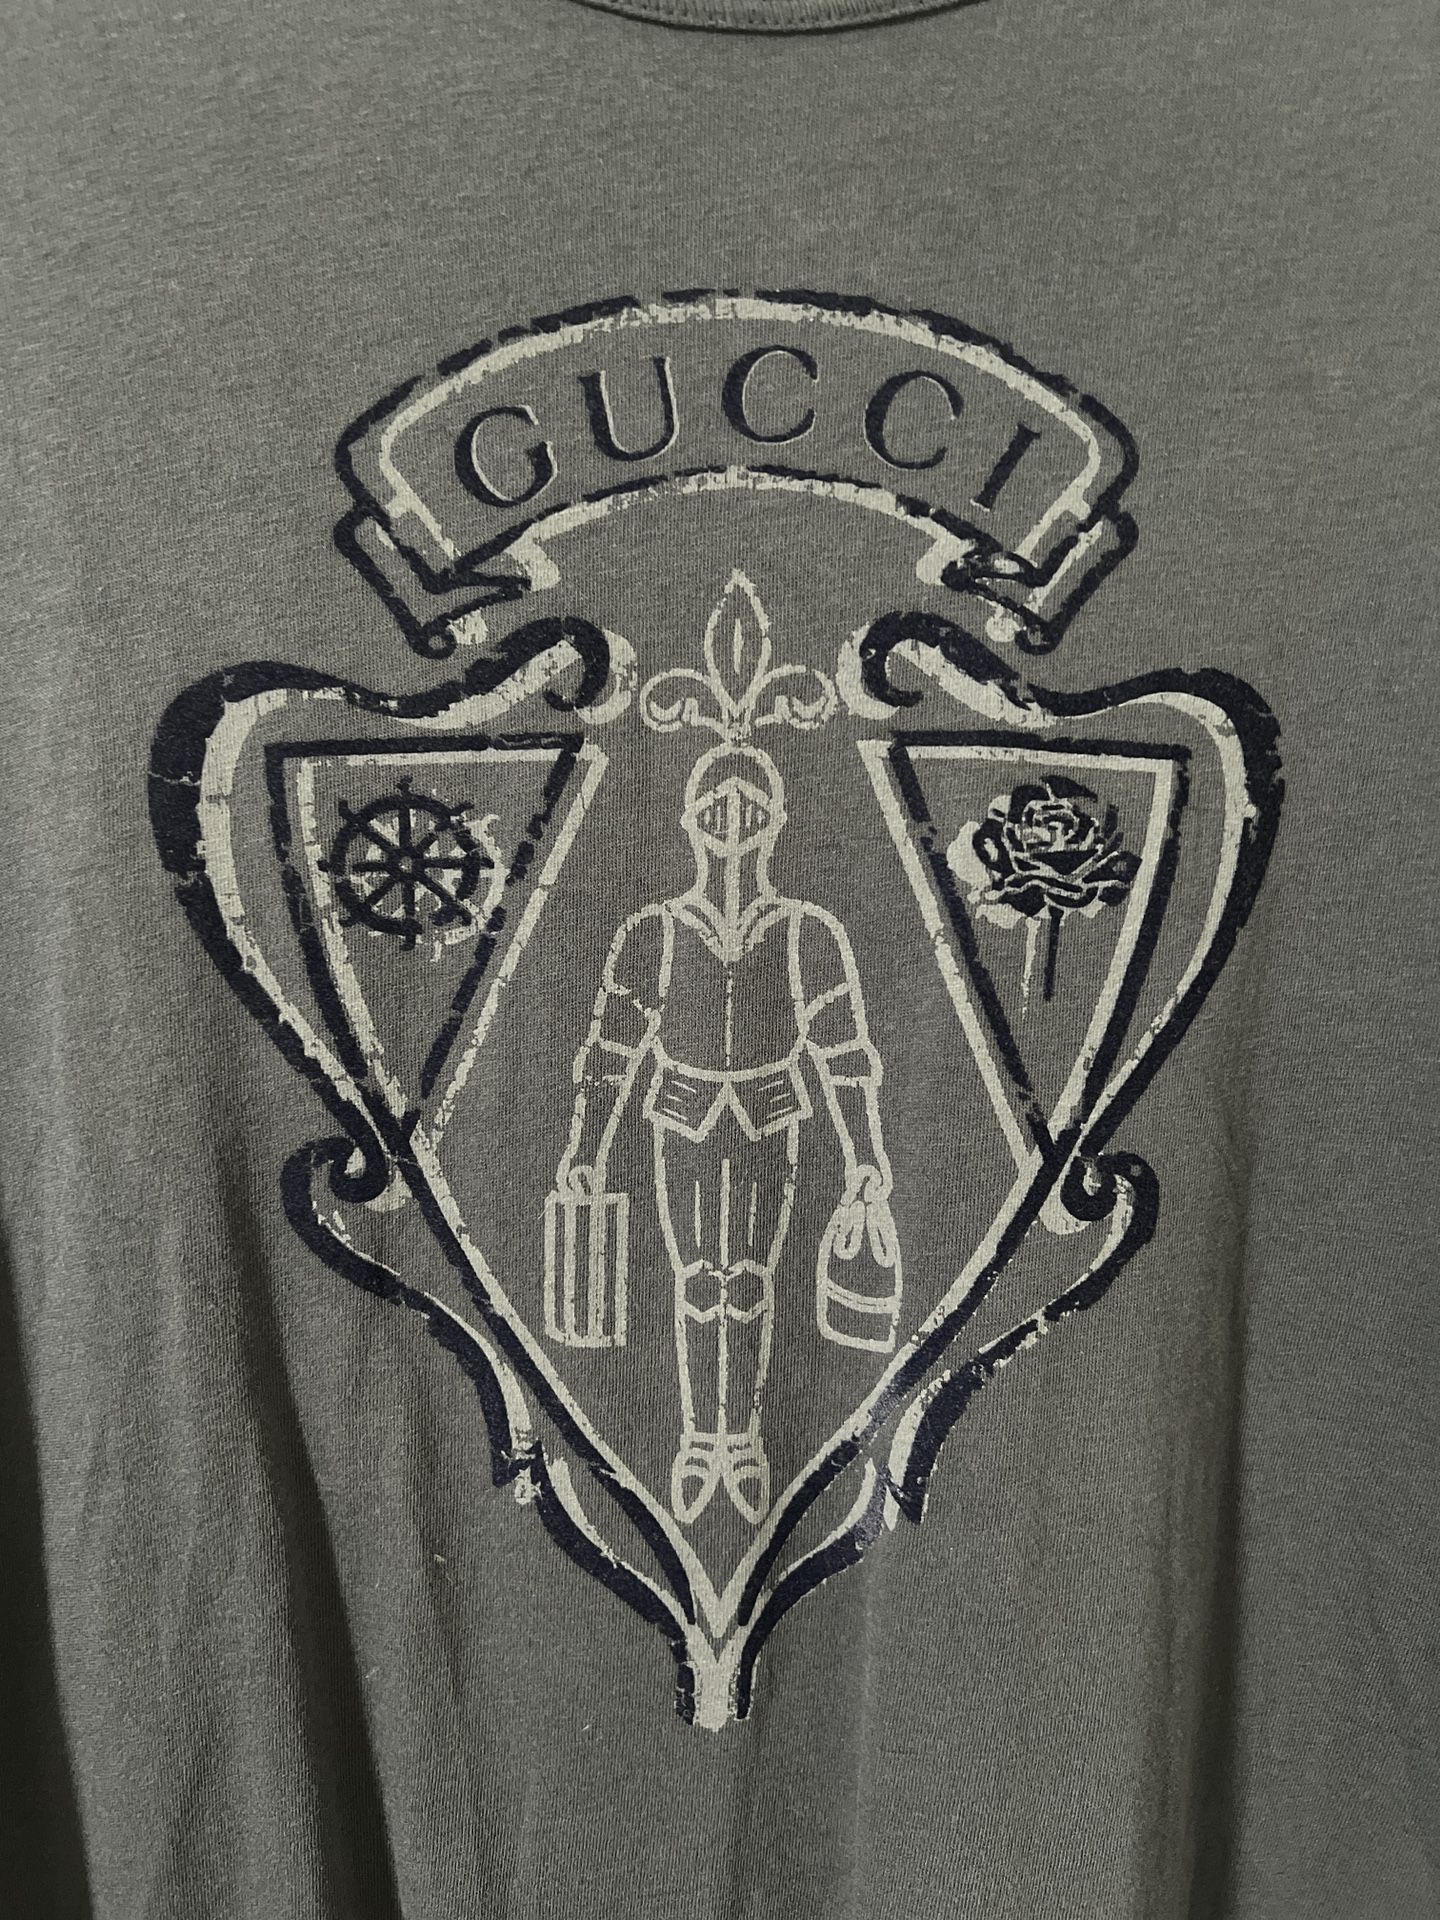 Gucci T Shirt Size Medium